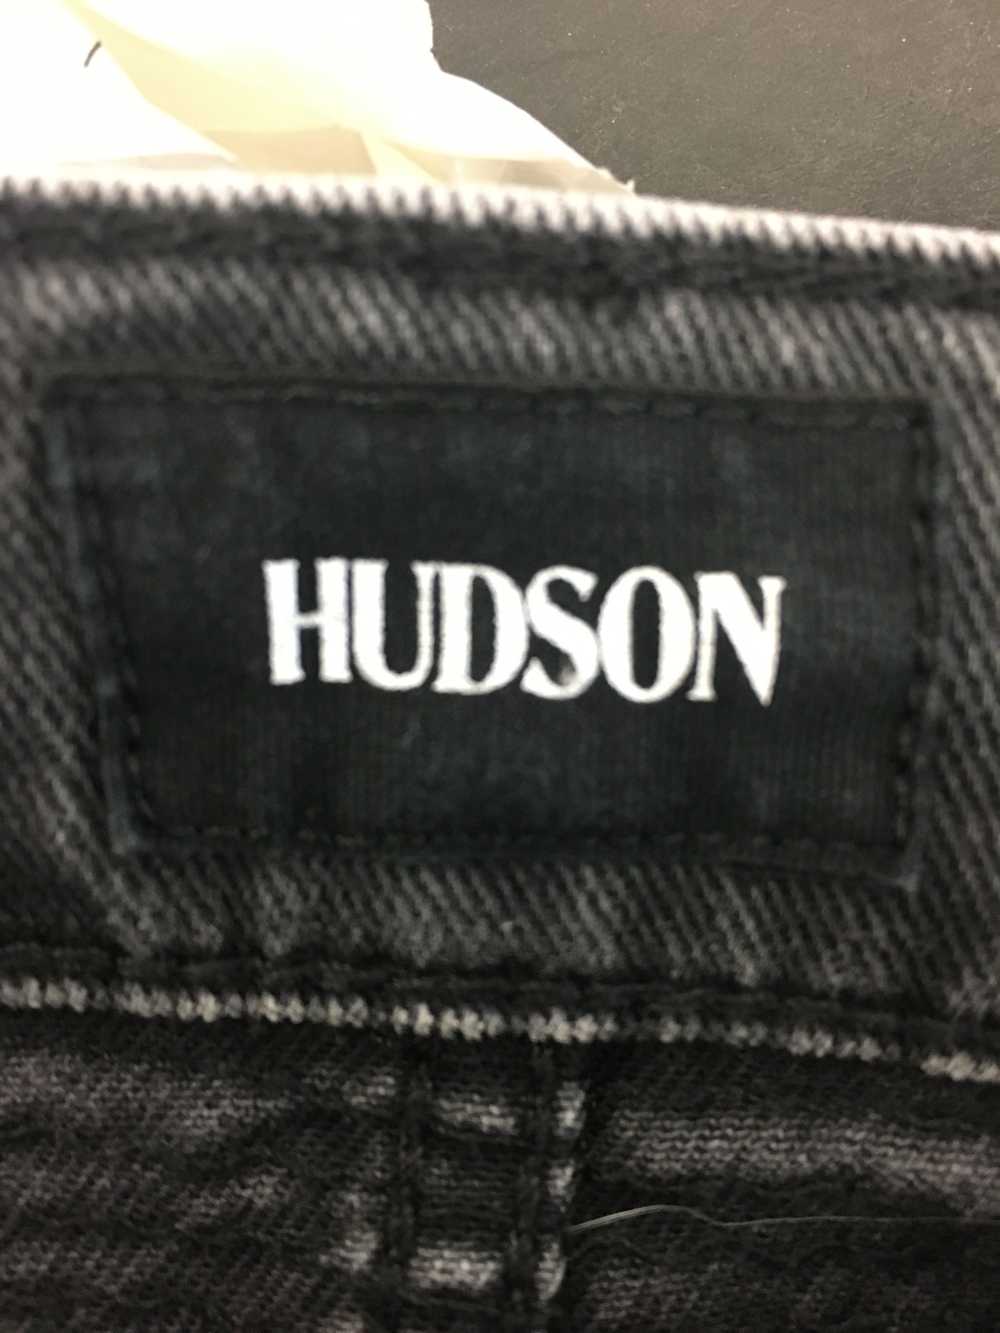 Hudson Women's Jeans Grey - image 2